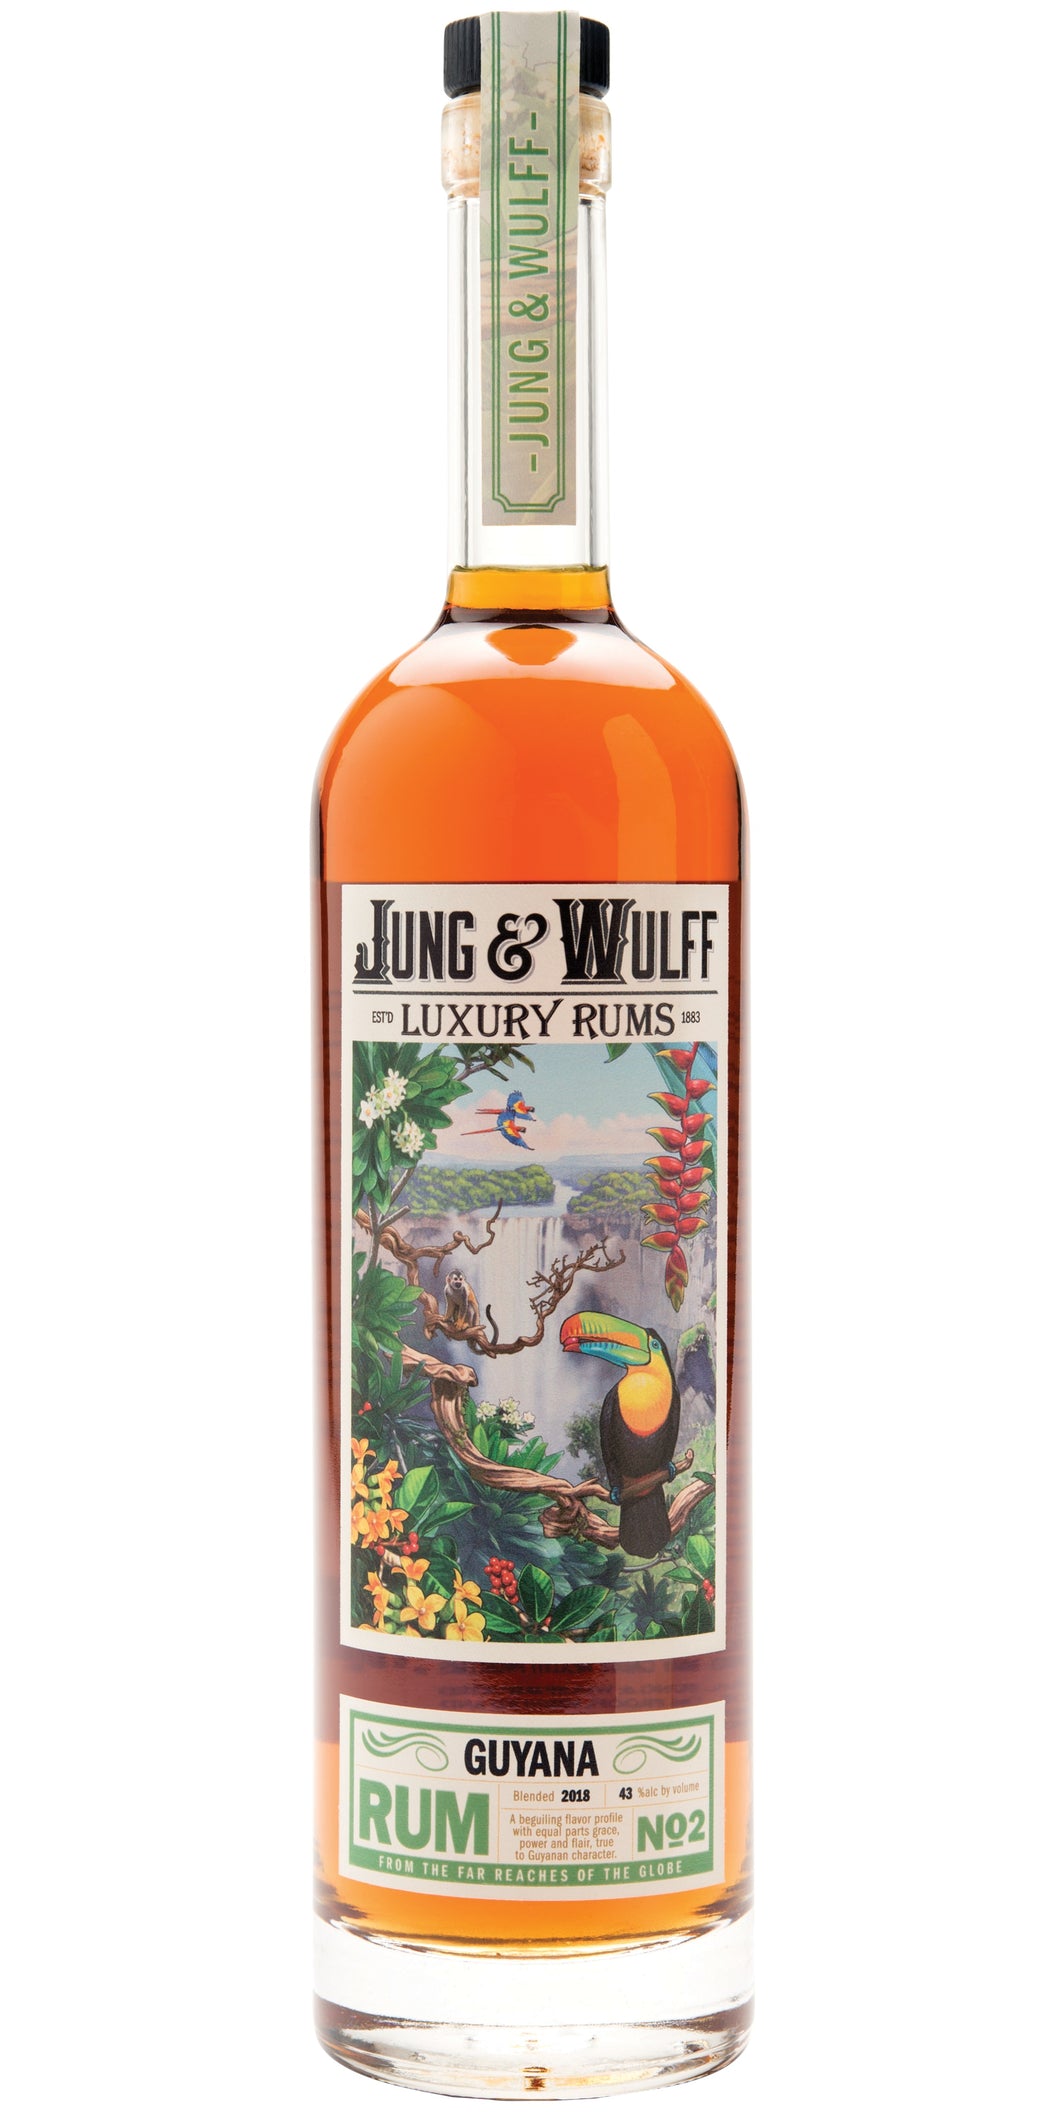 Jung & Wulff Guyana Rum